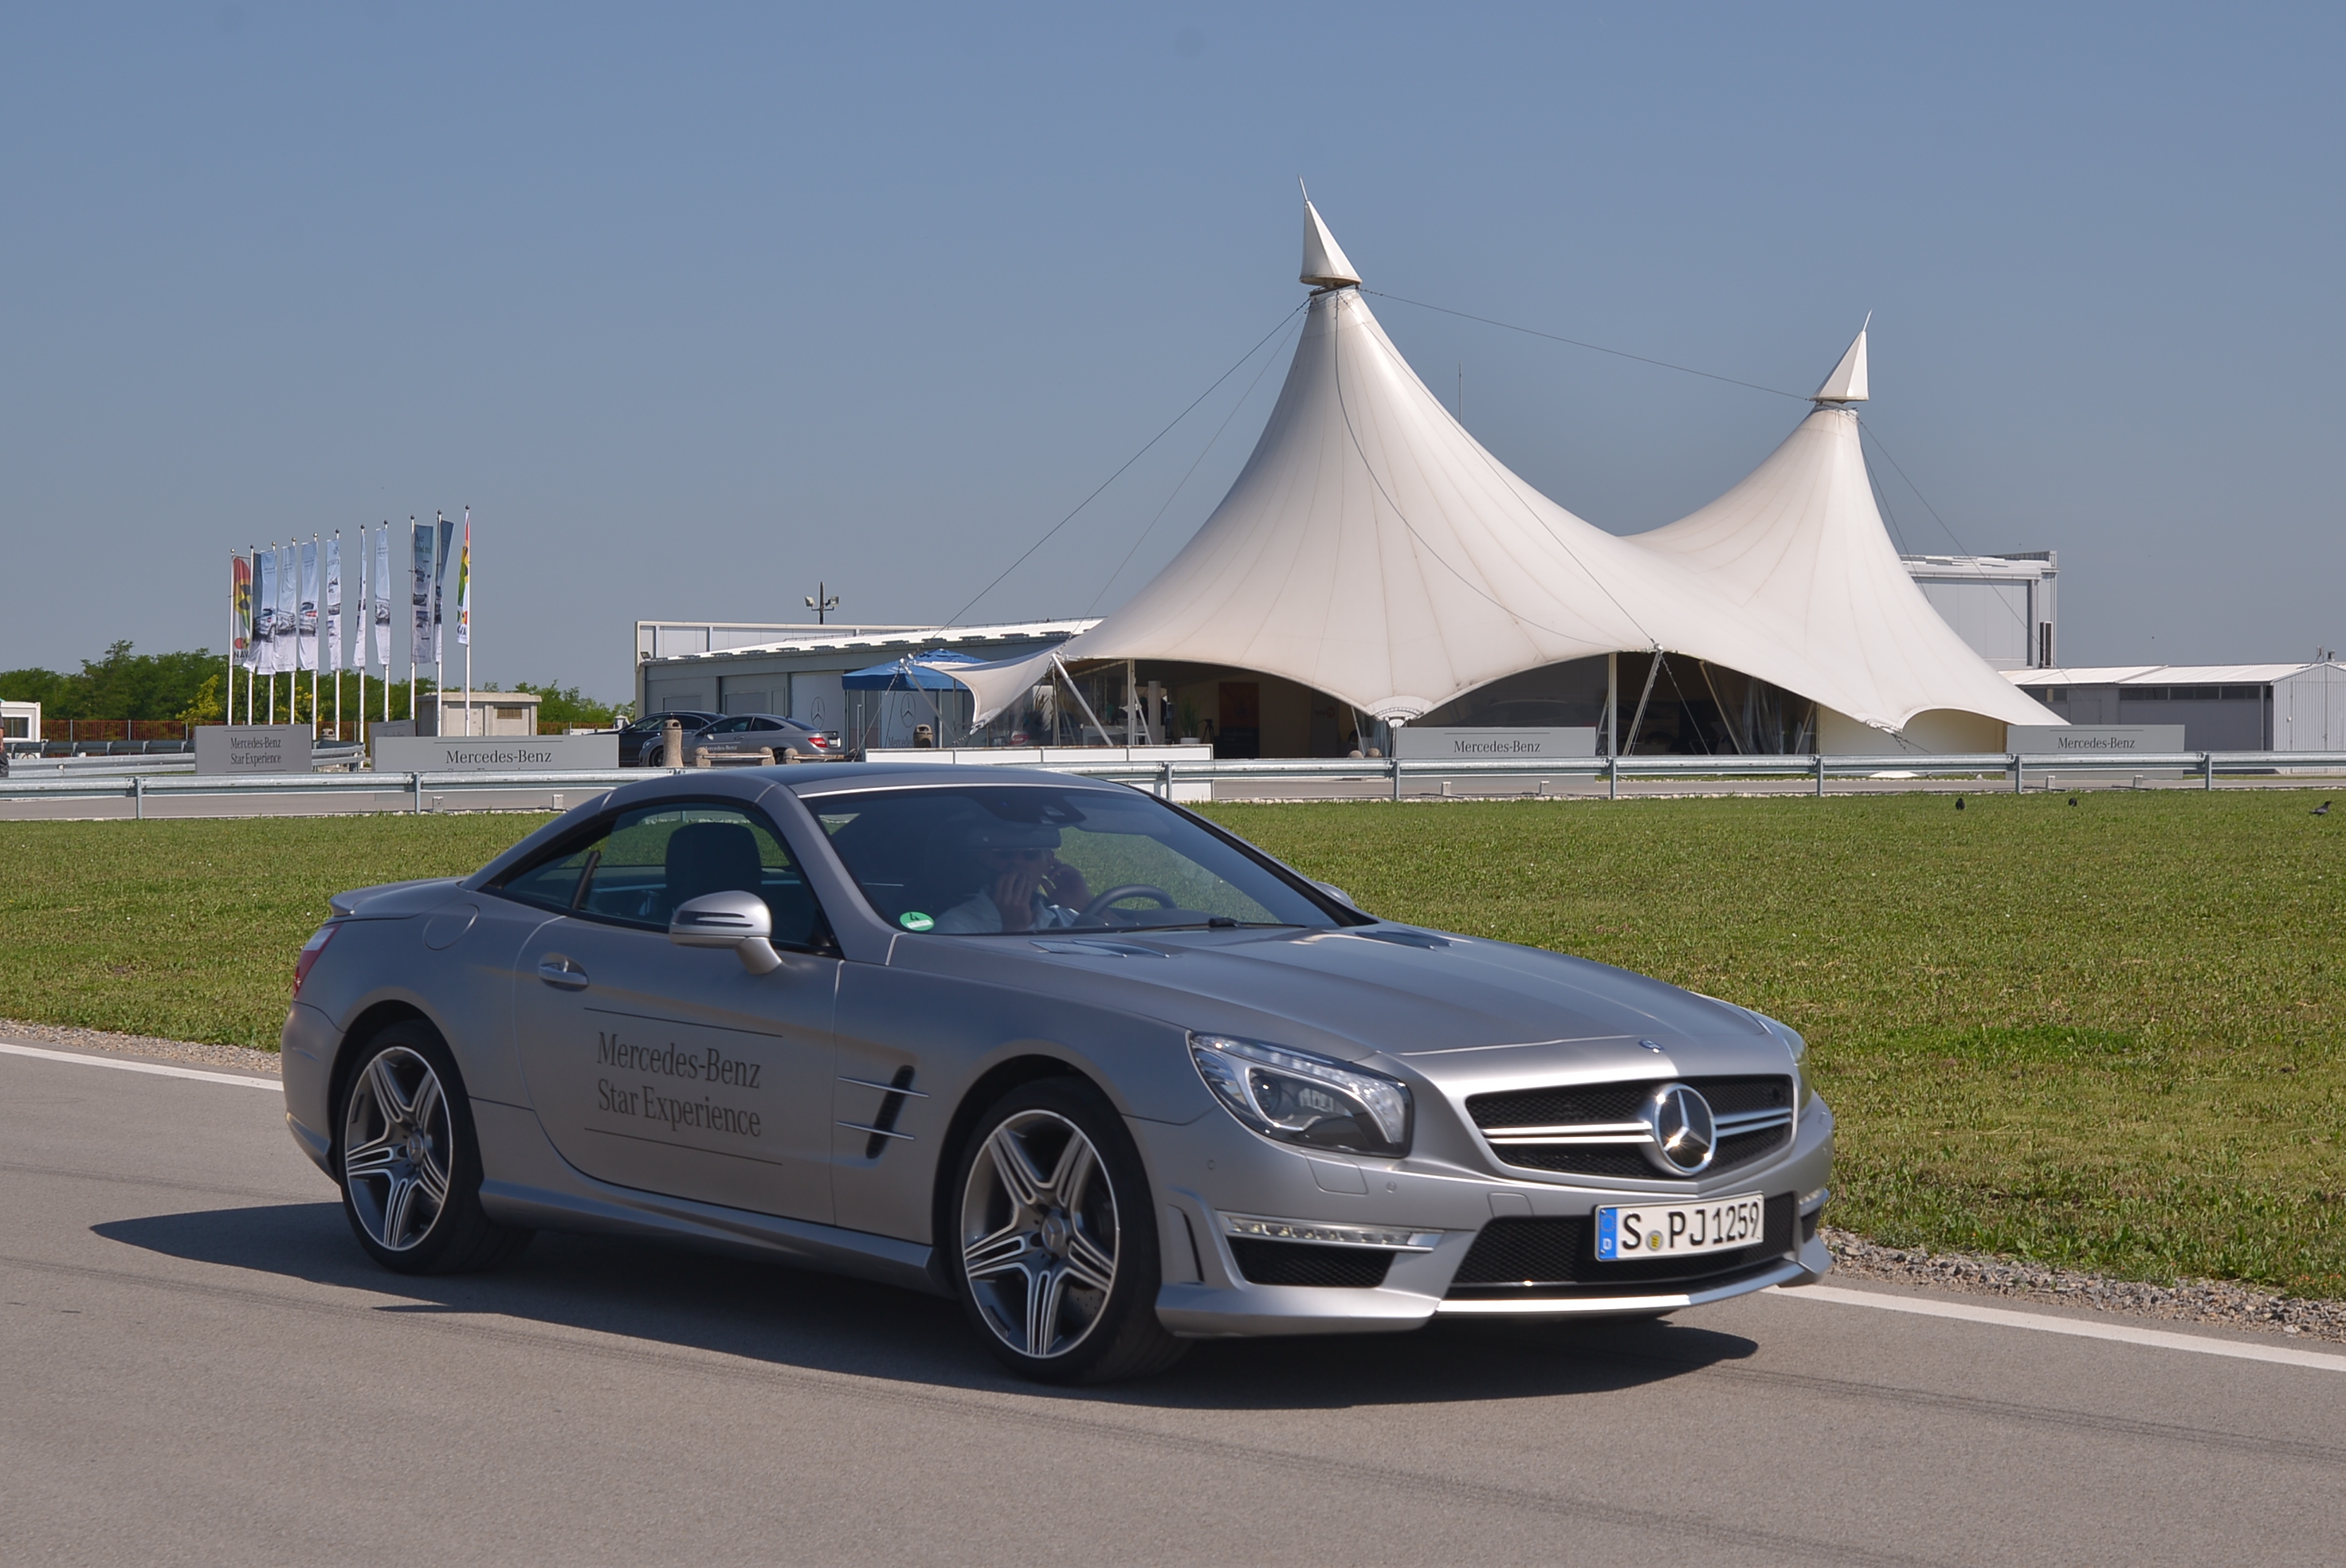 JOC 0309 Događaj za sve ljubitelje Mercedes Benz automobila: Star Experience “Your road trip”